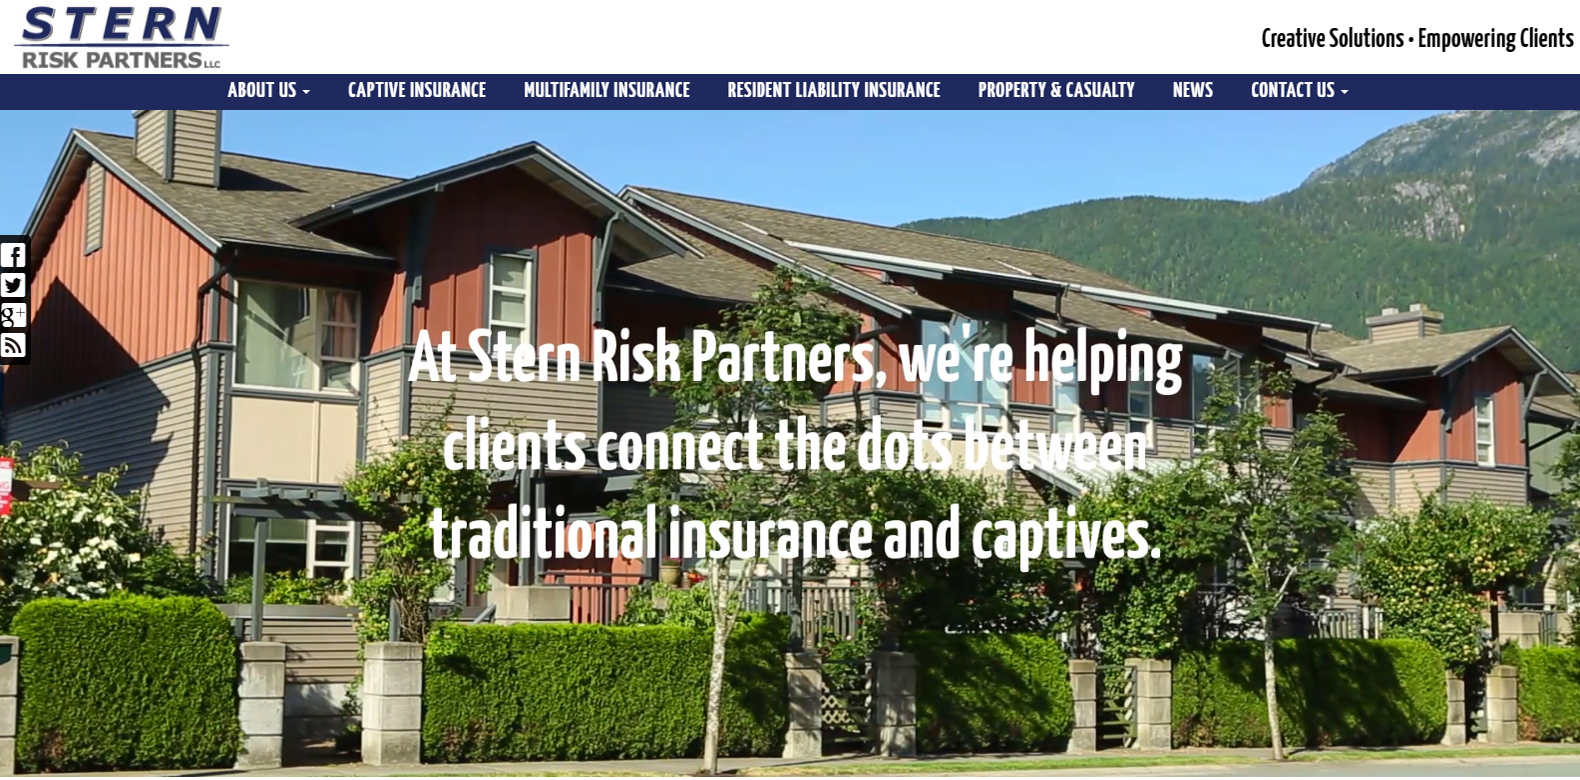 
New Website Launch: Stern Risk Partners